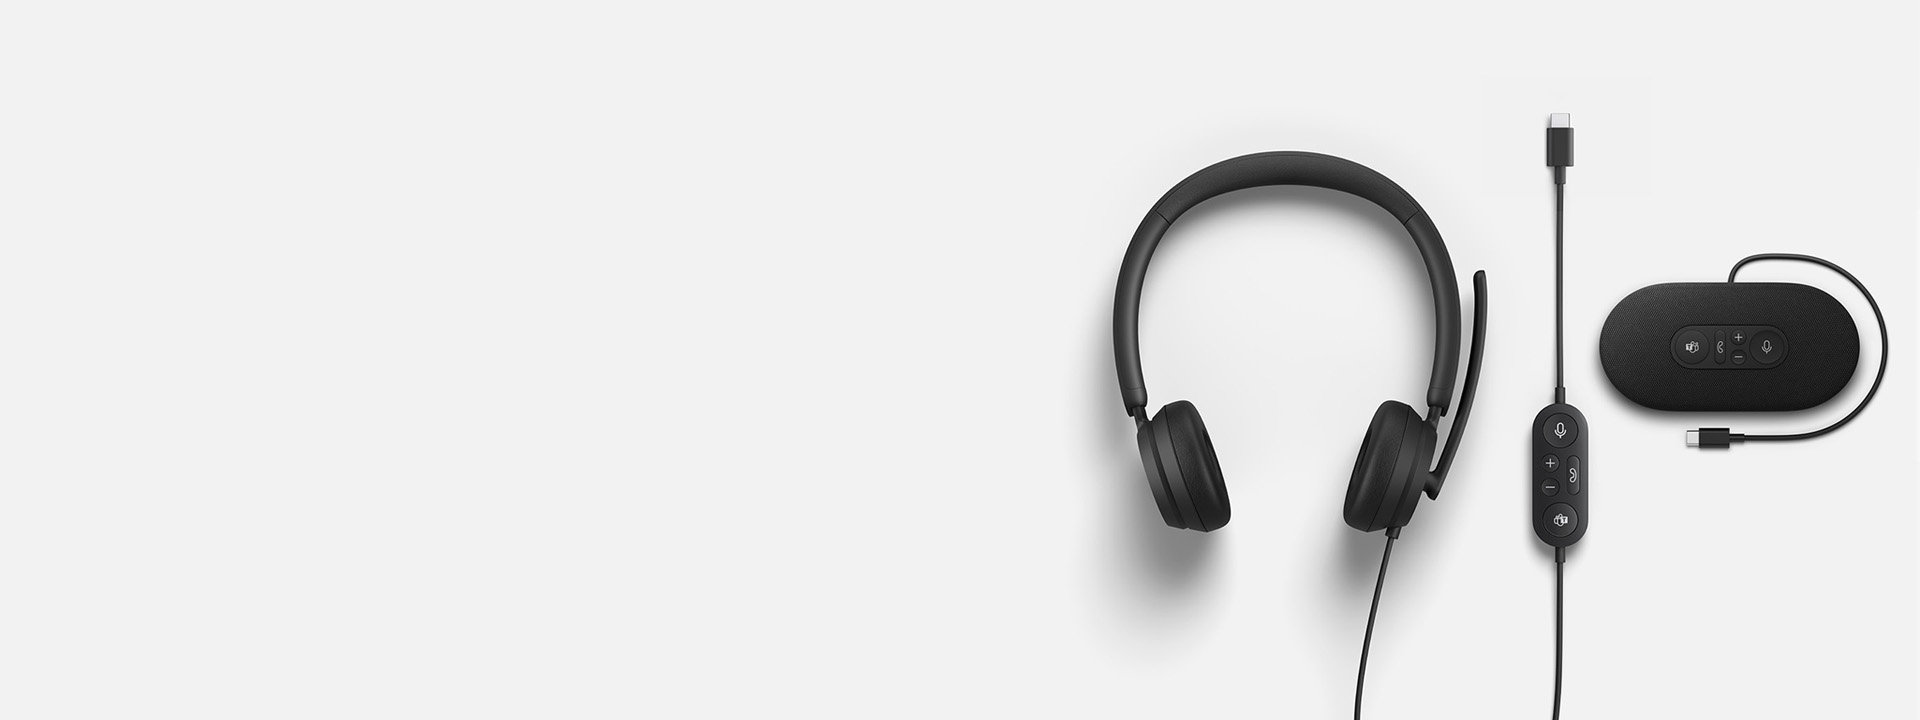 Use los auriculares Microsoft Modern USB-C Headset en Microsoft Teams -  Soporte técnico de Microsoft